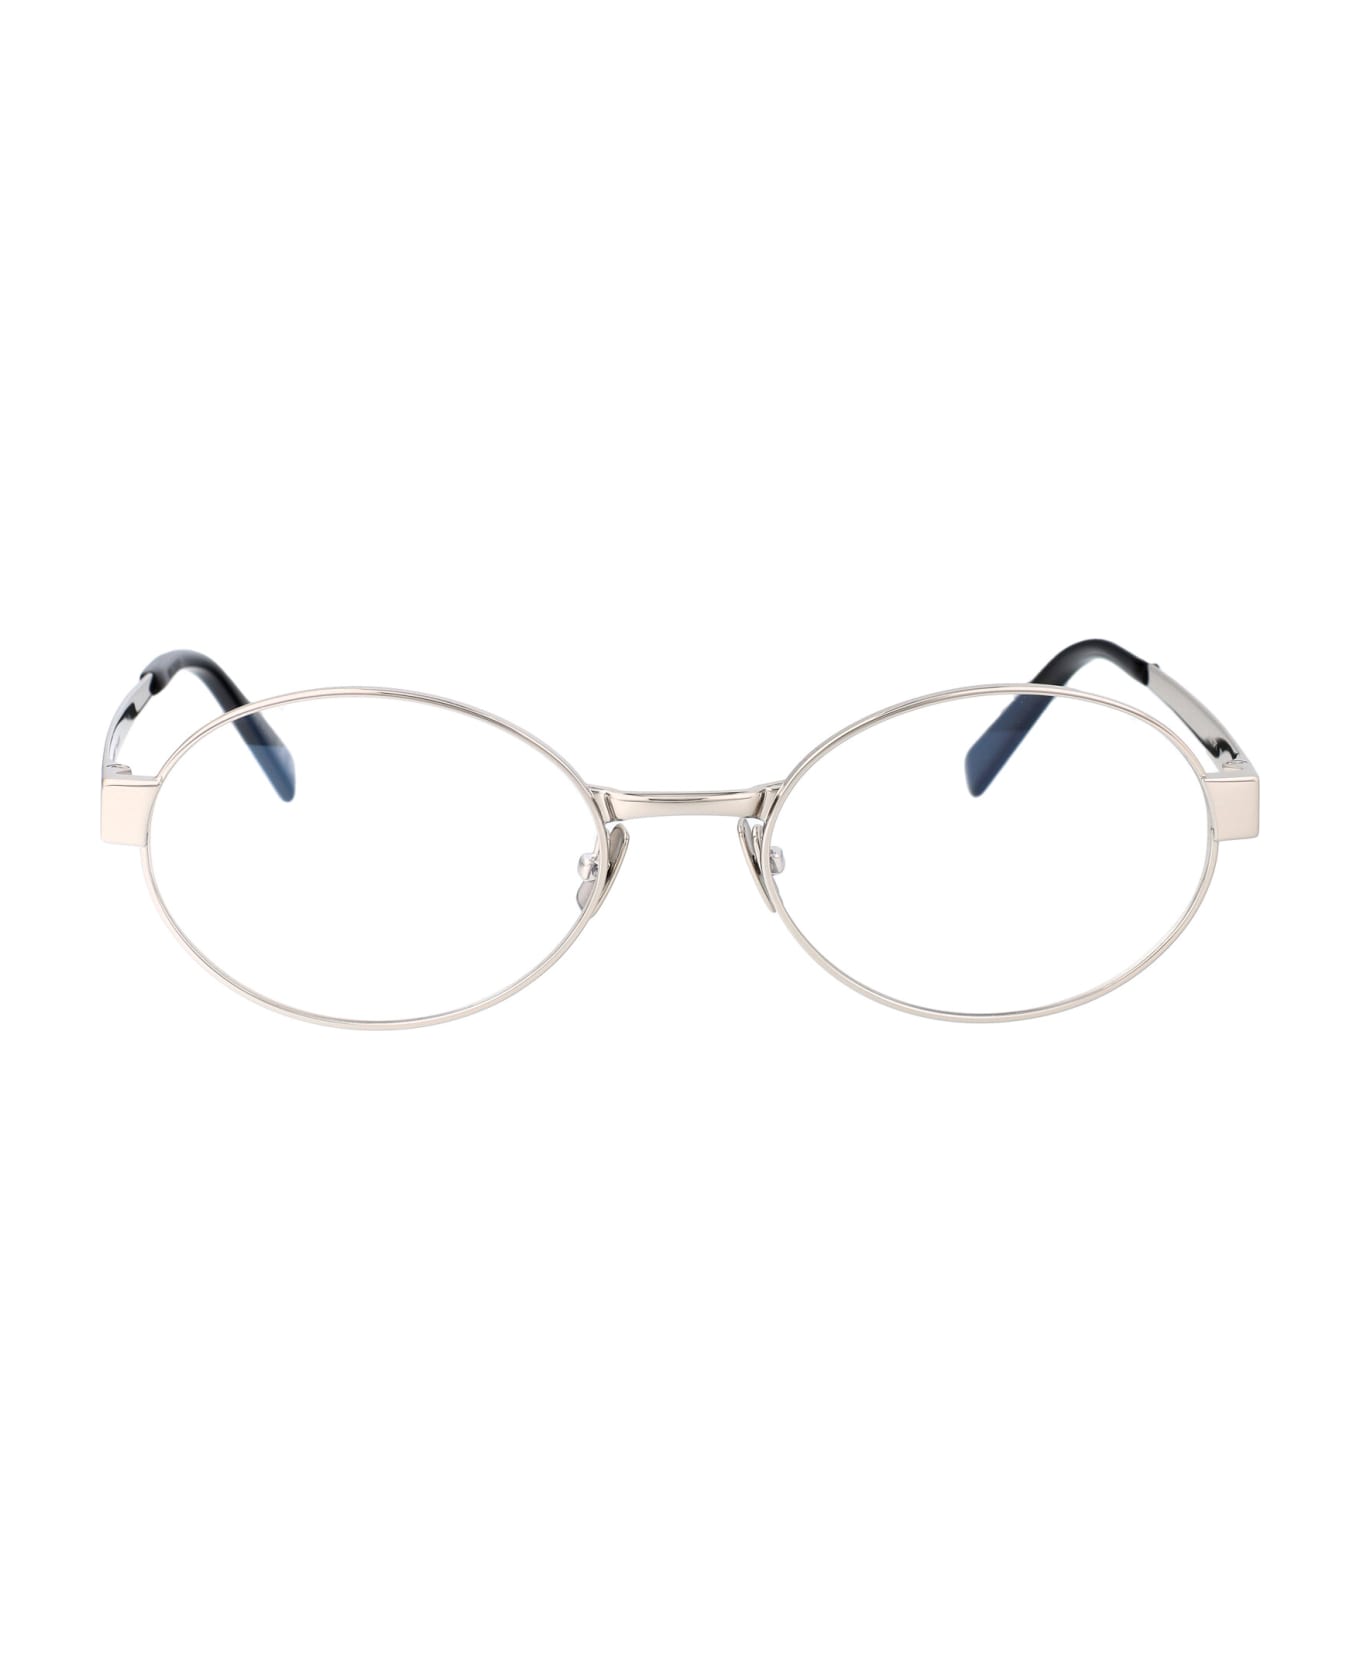 Saint Laurent Eyewear Sl 692 Opt Glasses - 001 SILVER SILVER TRANSPARENT アイウェア